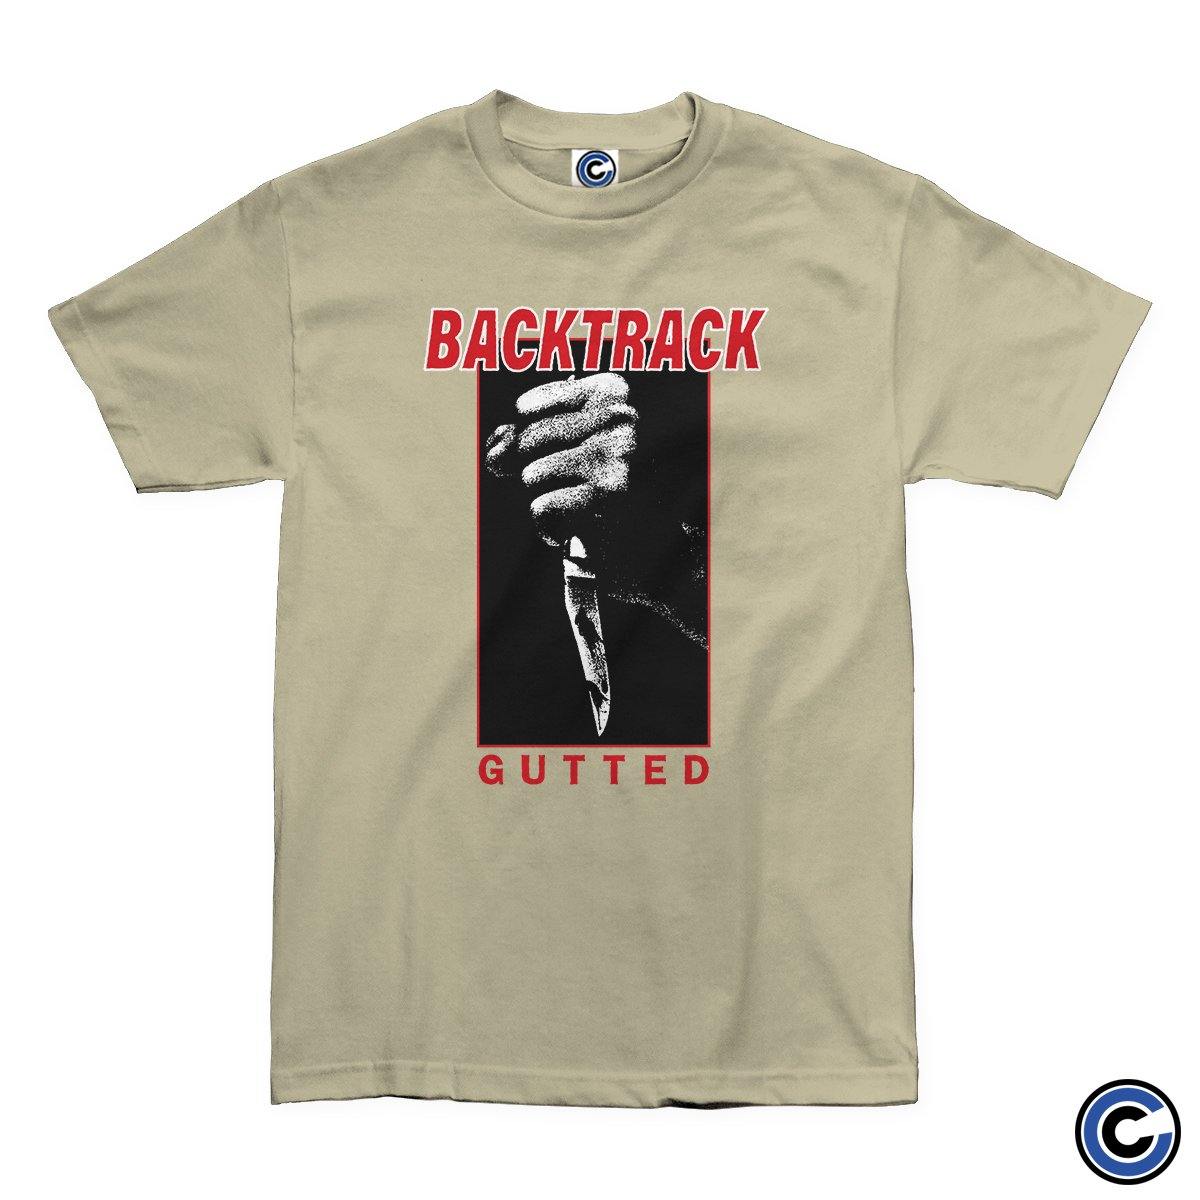 Buy – Backtrack "Gutted" Shirt – Band & Music Merch – Cold Cuts Merch